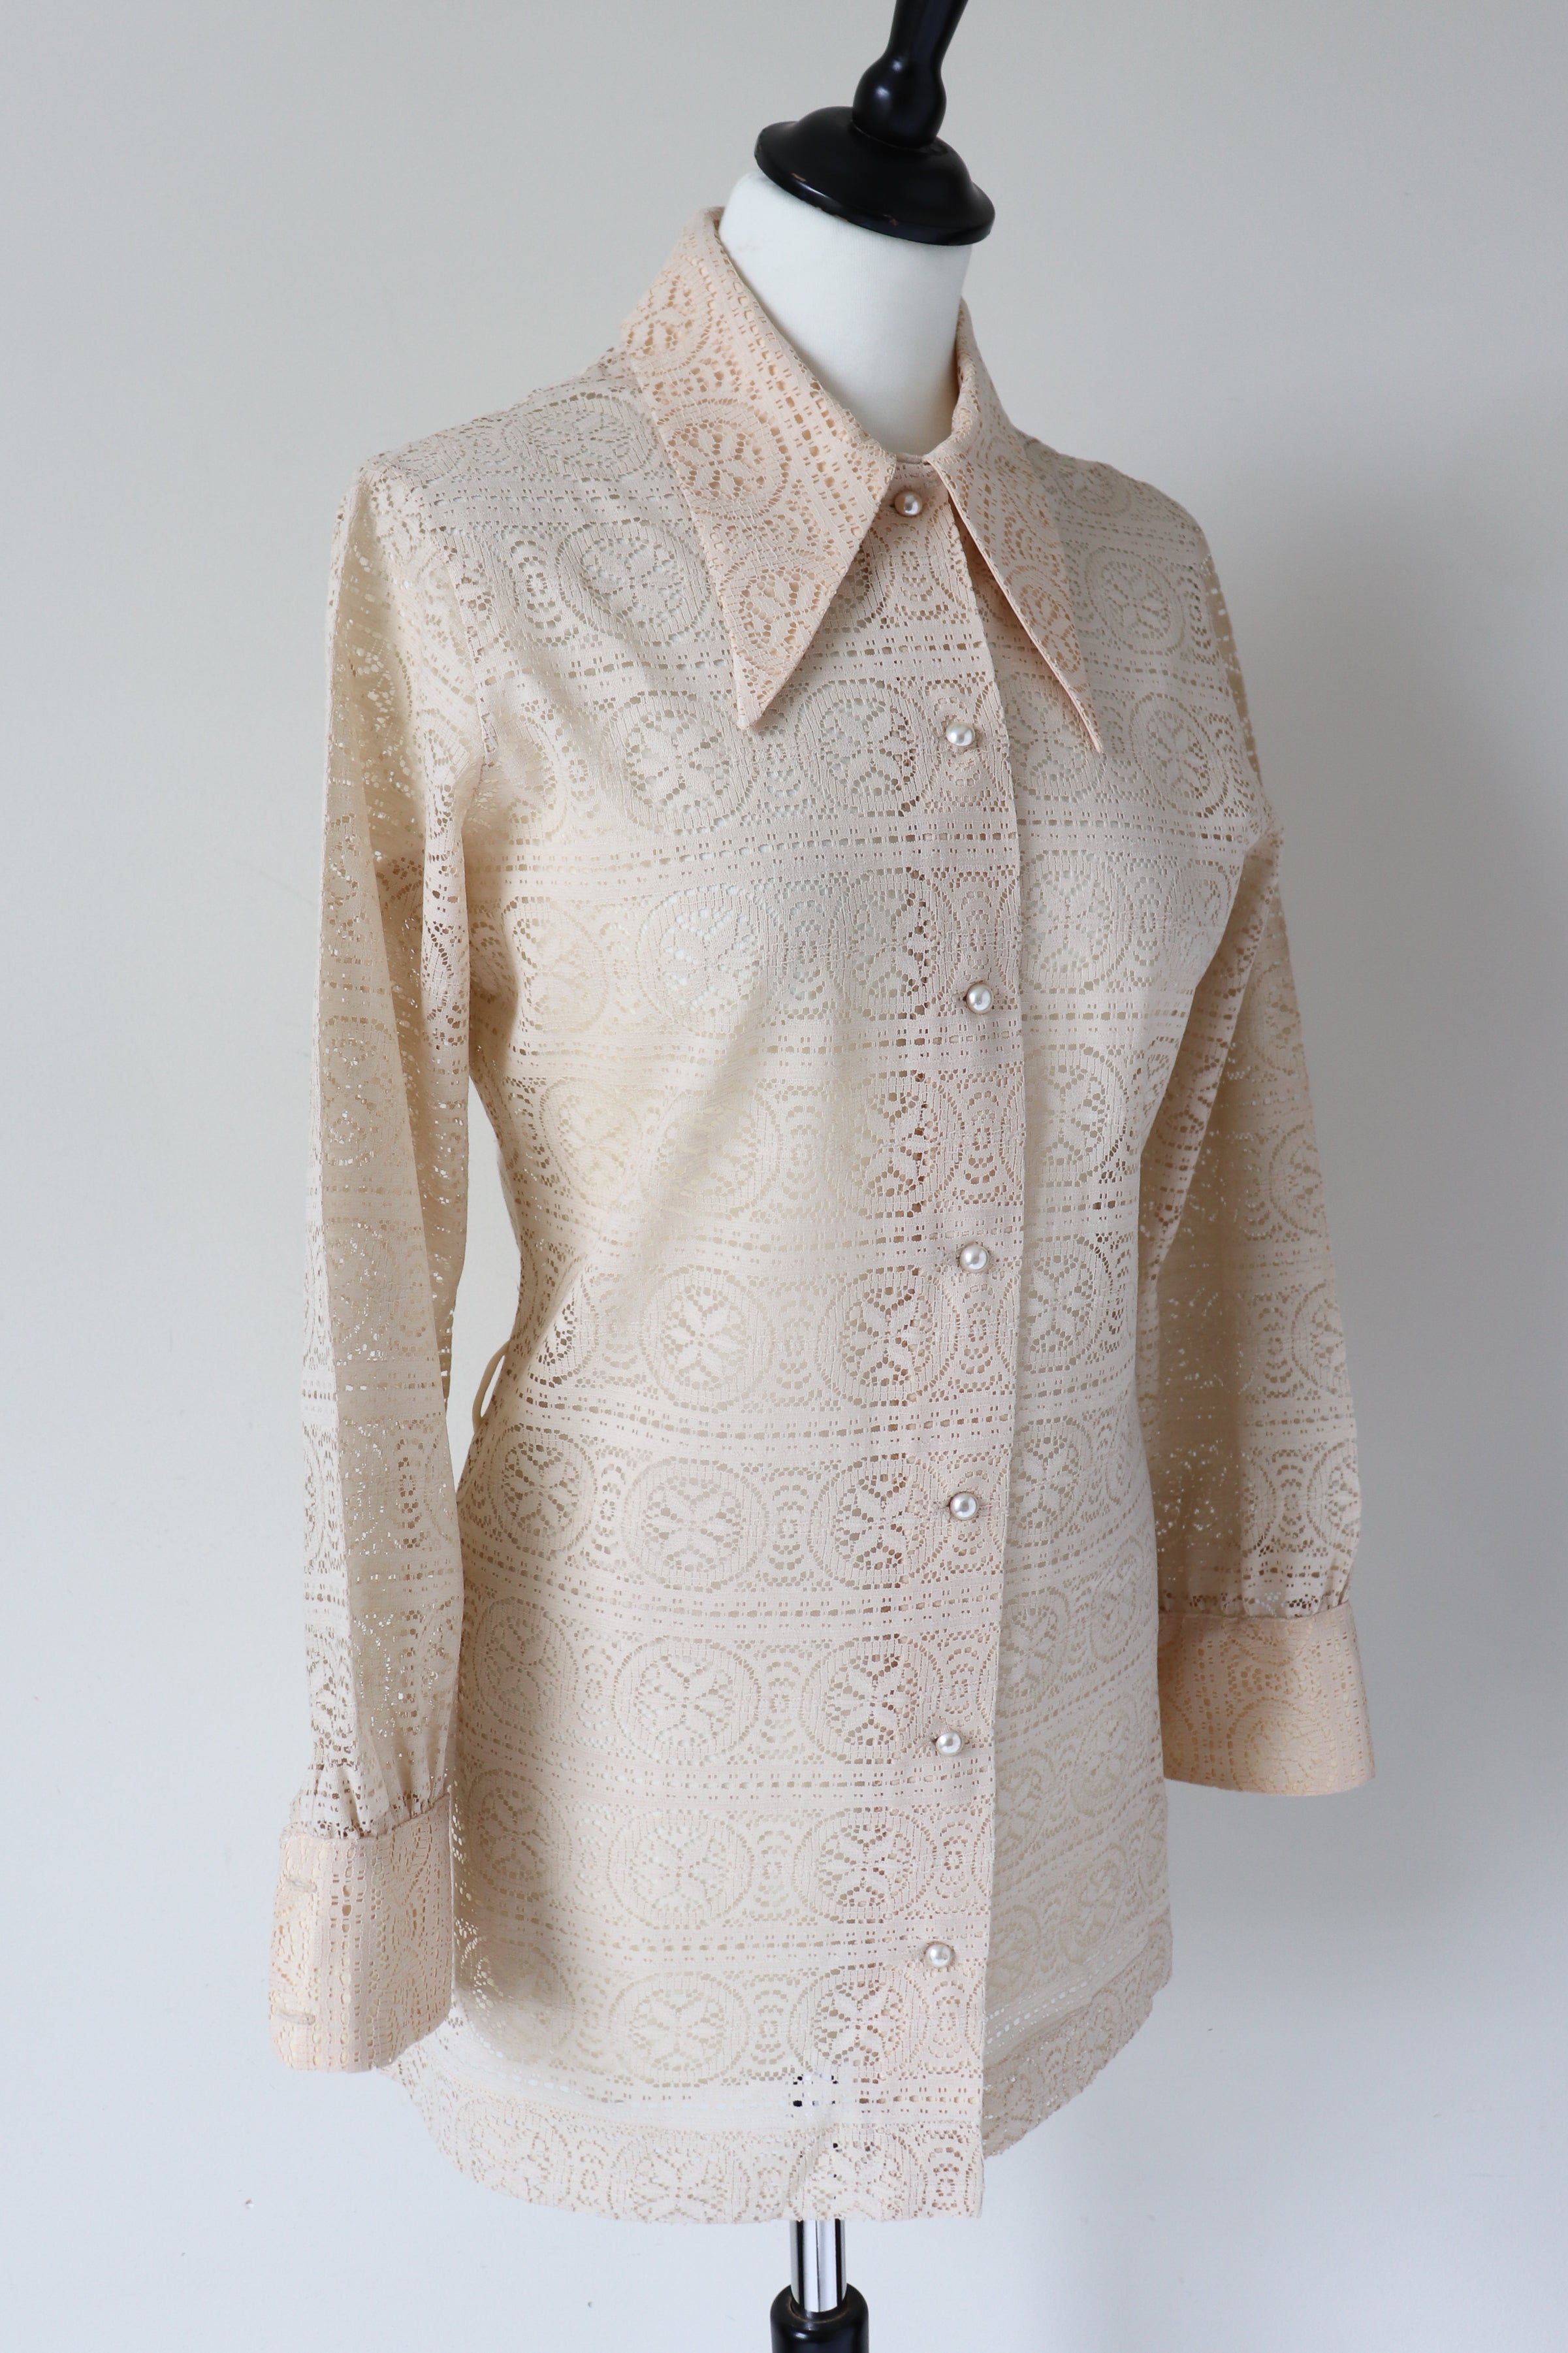 St Michael Tunic - Cream Lace Shirt Top - 1970s Vintage M&S - Fit S /  UK 10